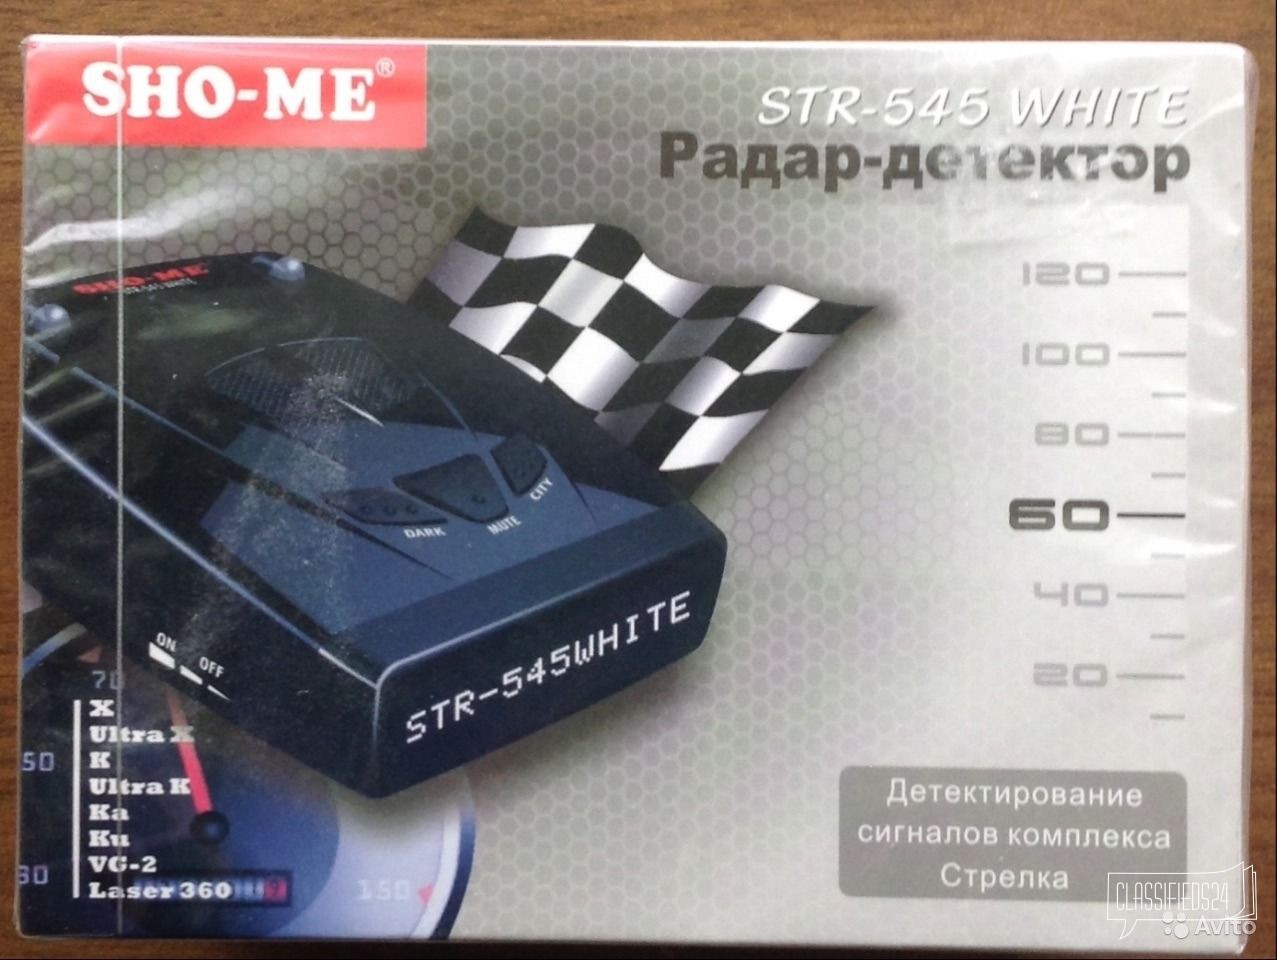 Sho-me 545 STR в городе Североморск, фото 5, телефон продавца: +7 (960) 022-79-22